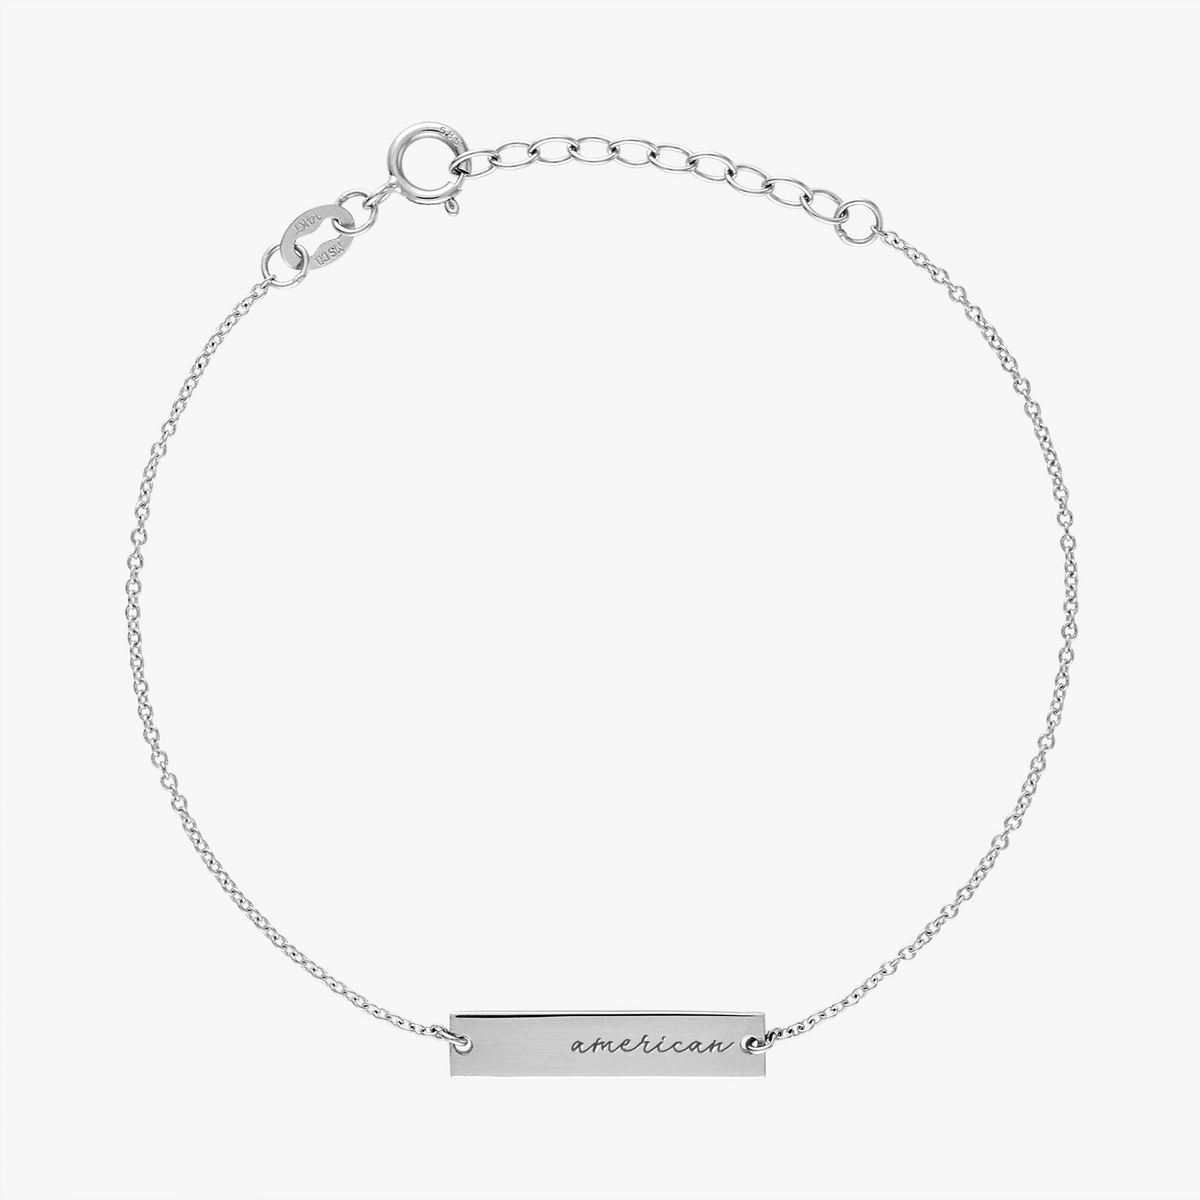 American Horizontal Bar Bracelet in Sterling Silver